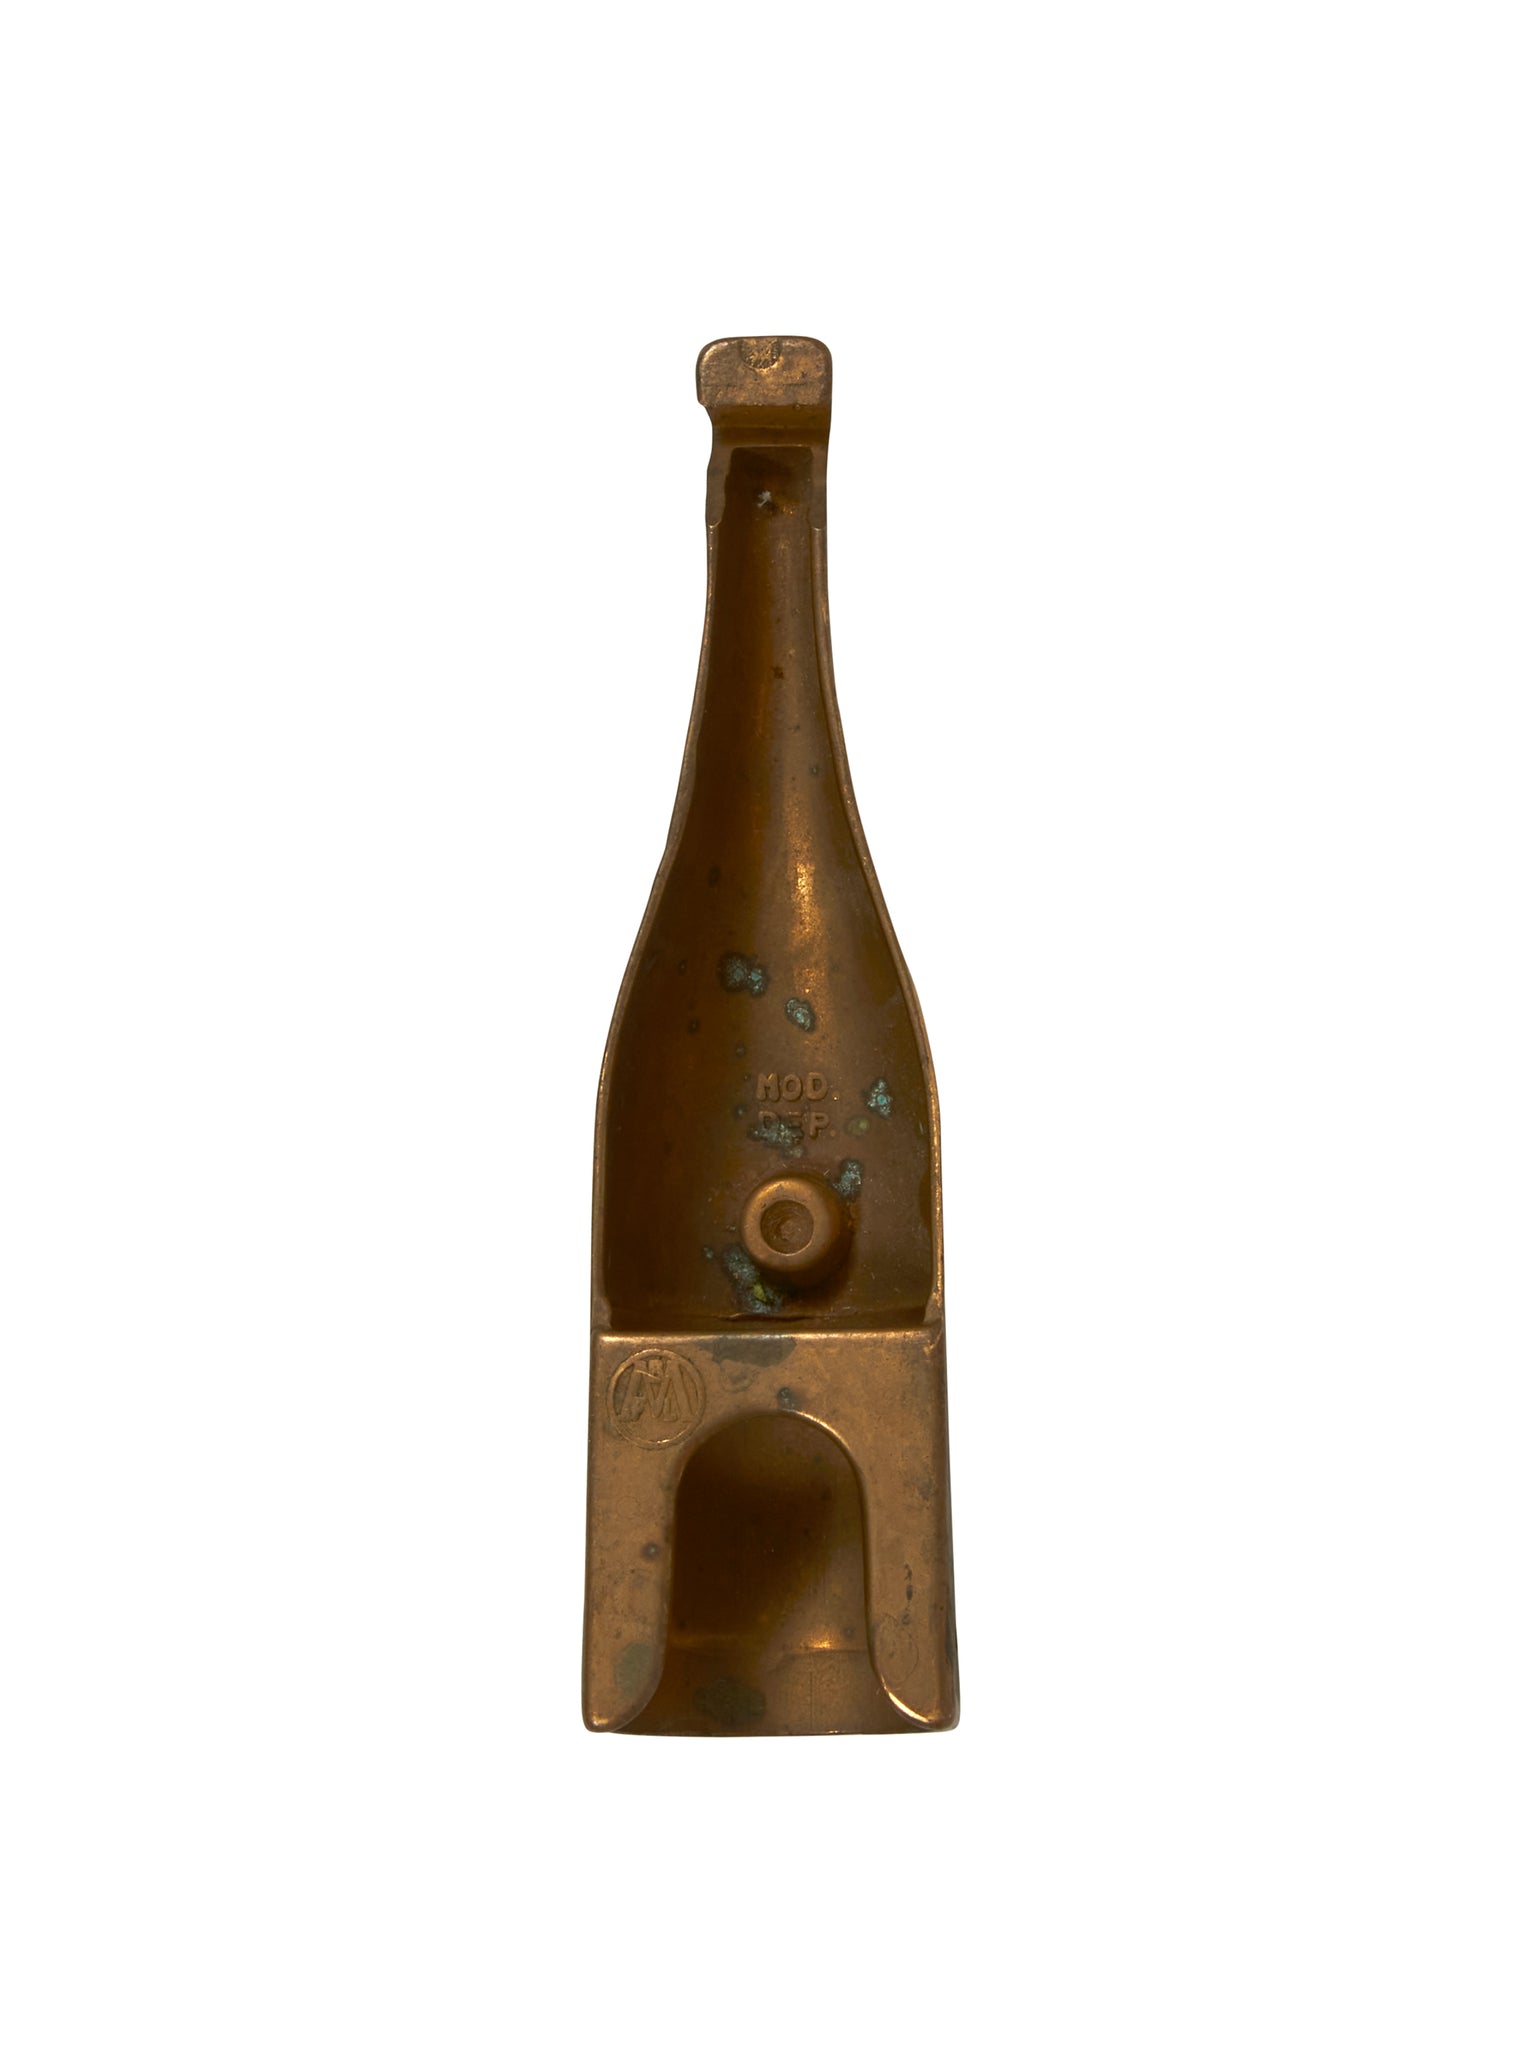 Vintage French Champagne Bottle Shaped Bottle Opener Weston Table